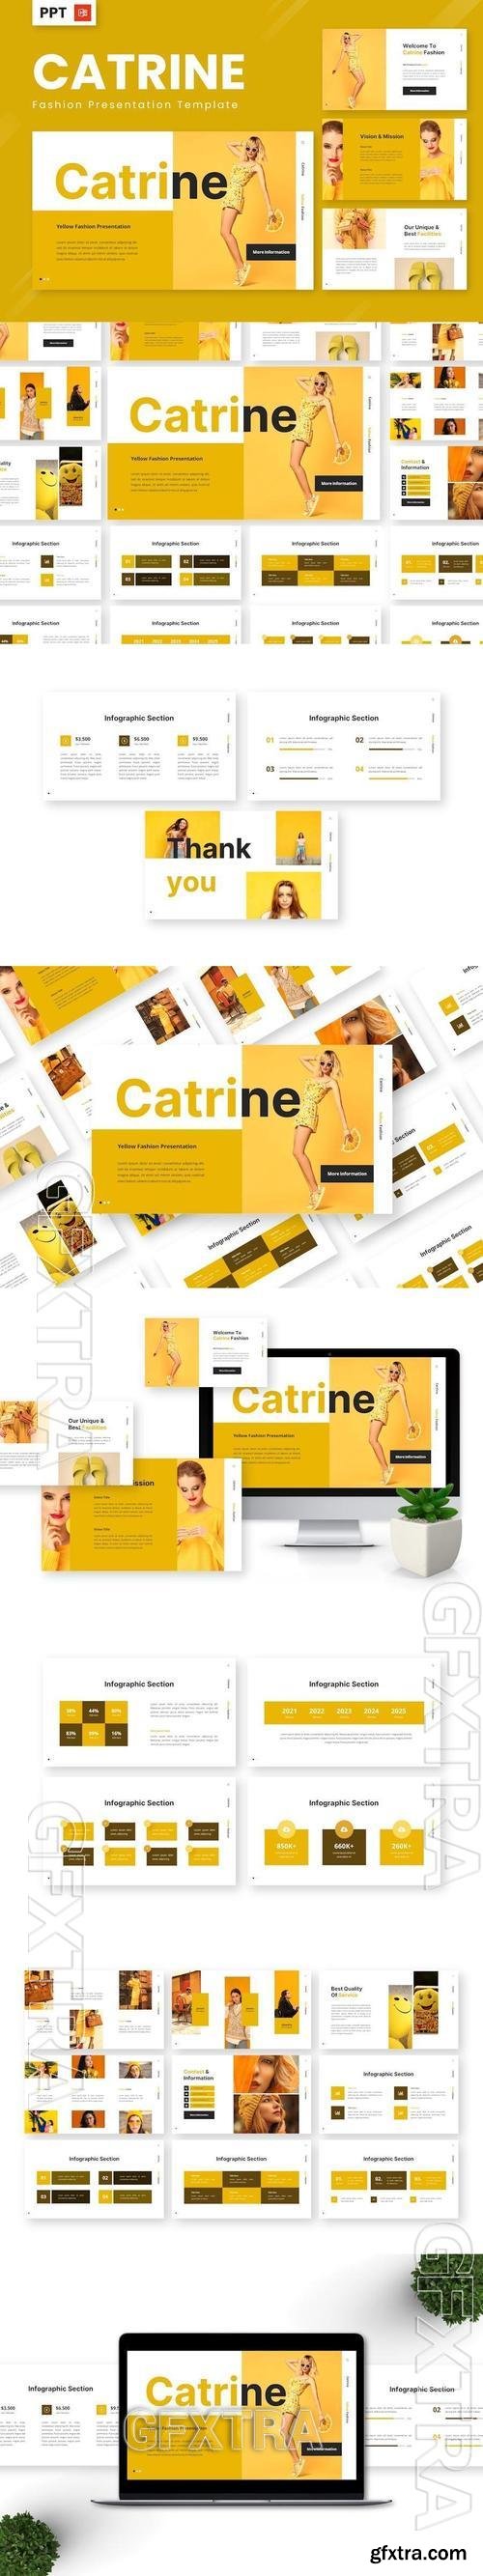 Catrine - Fashion Powerpoint Templates PTSJ4MR